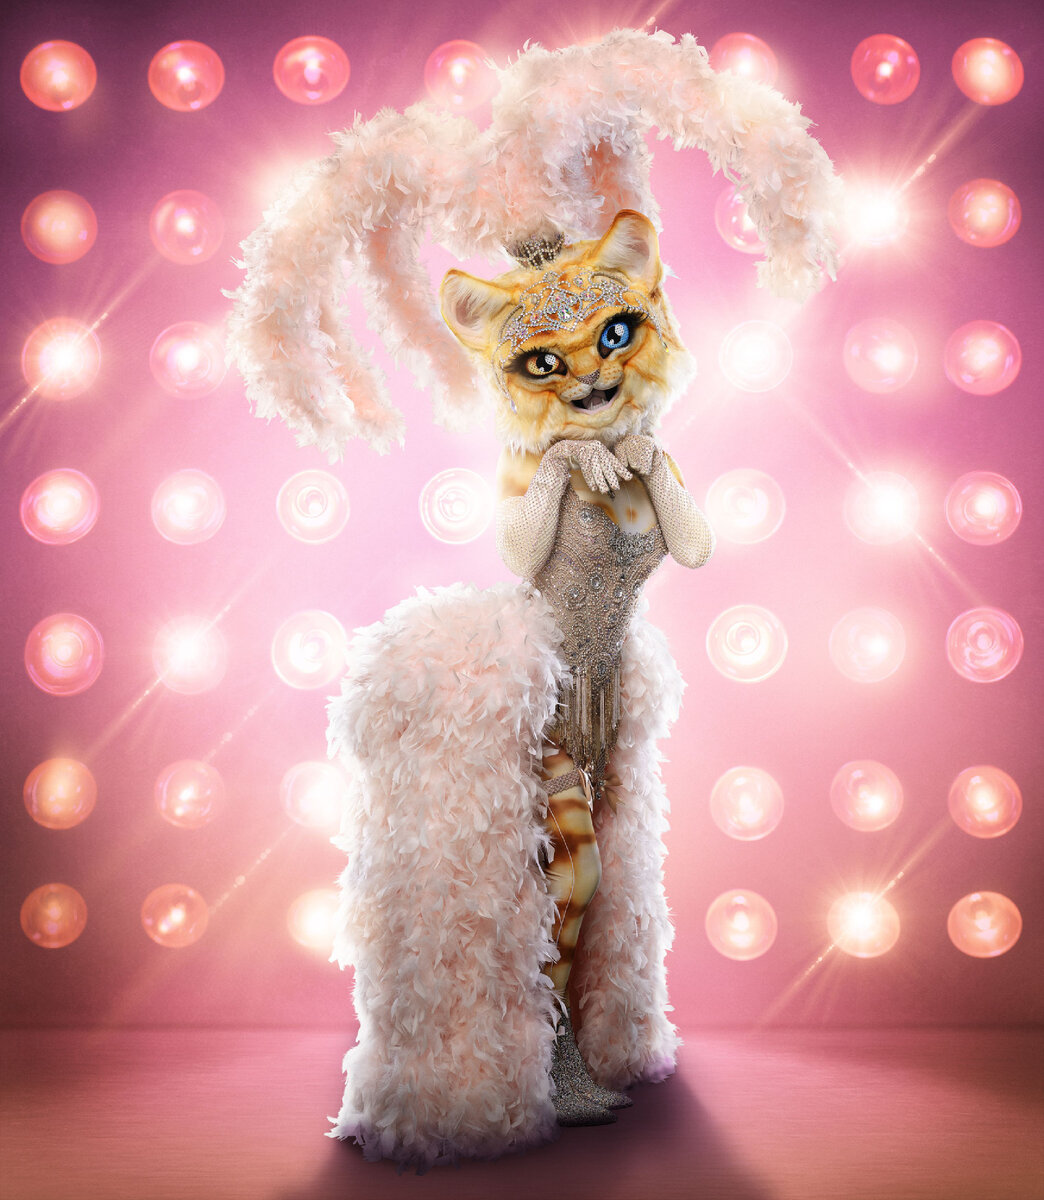 Песня кота из маски. Mask Singer шоу 2020 Georgina. Шоу "the masked Singer" -2020. Шоу маска кошка. Кошка из шоу маска.